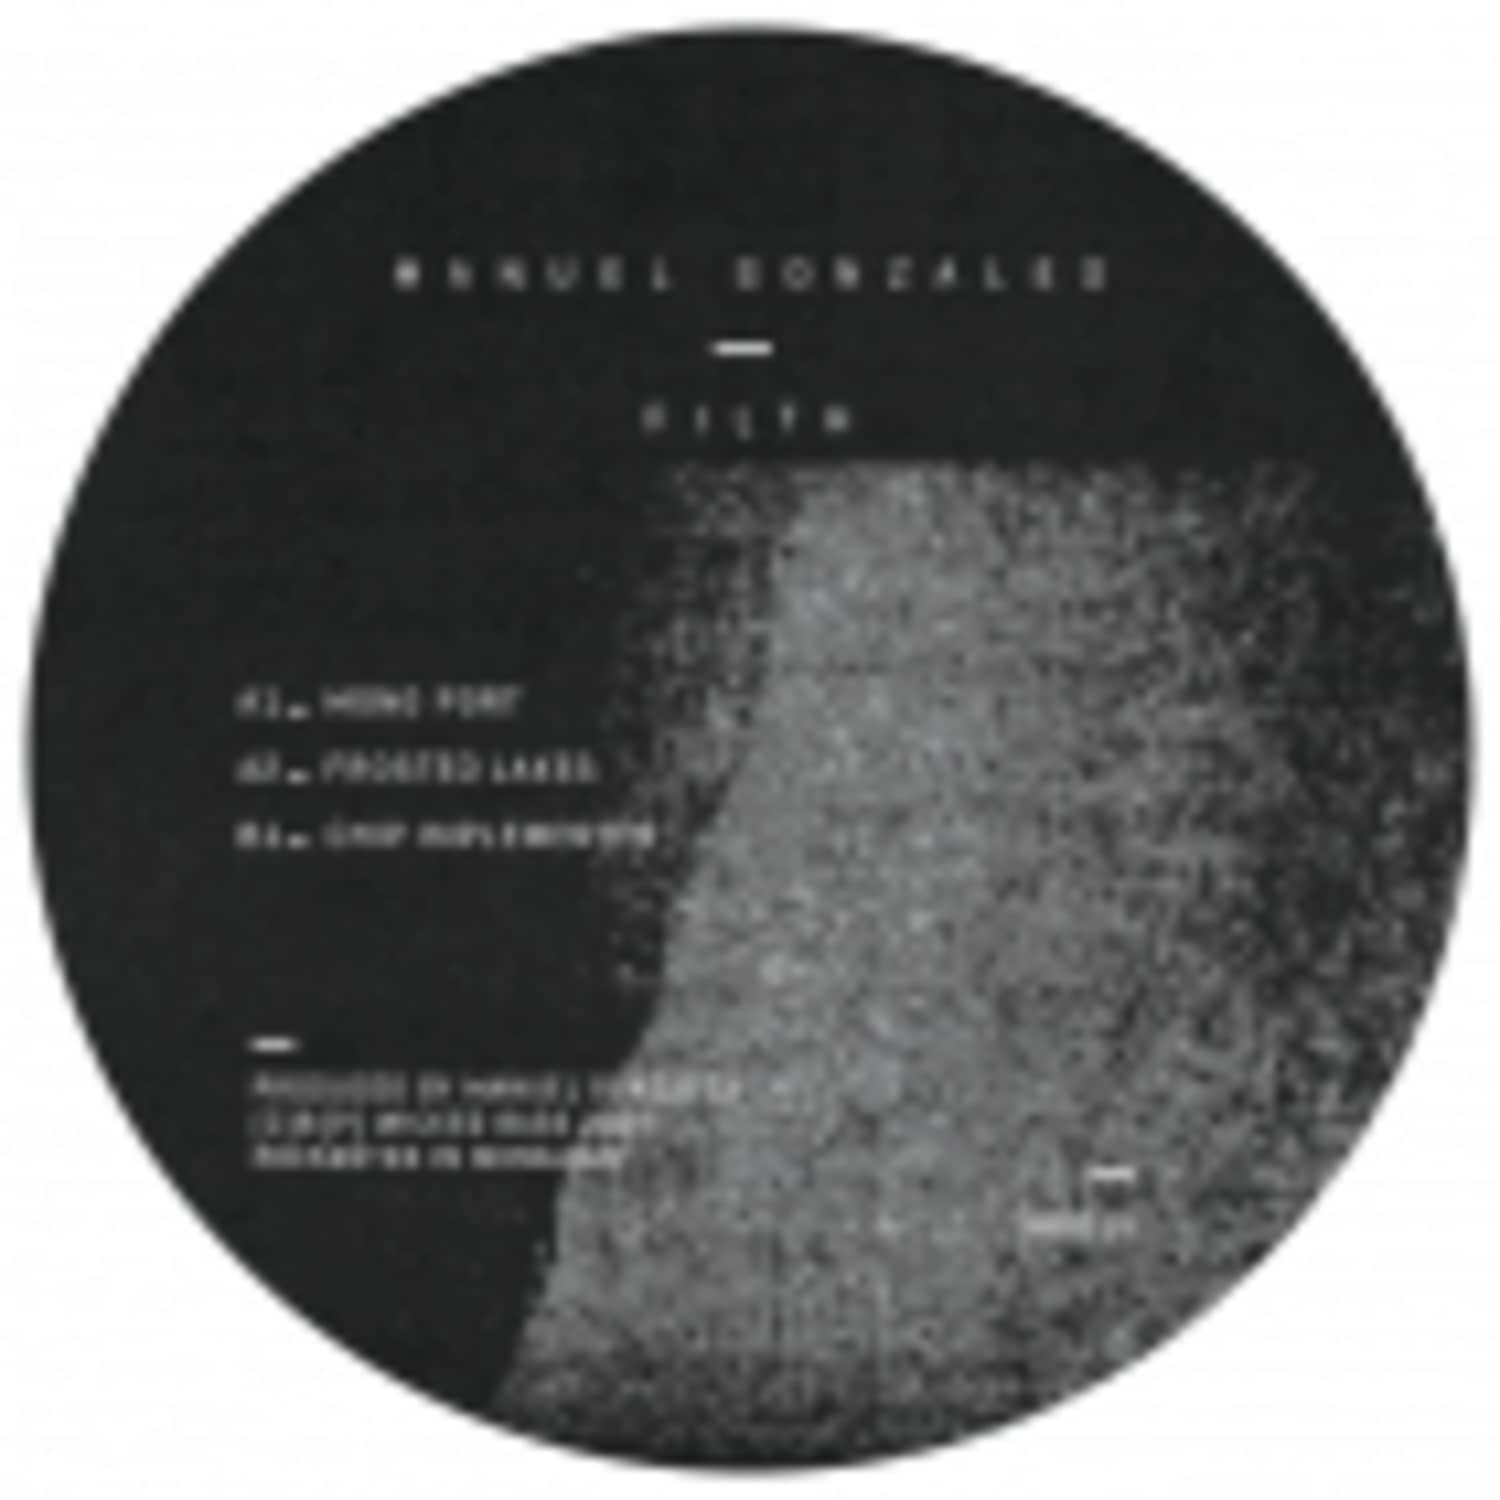 Manuel Gonzales - FILTH EP